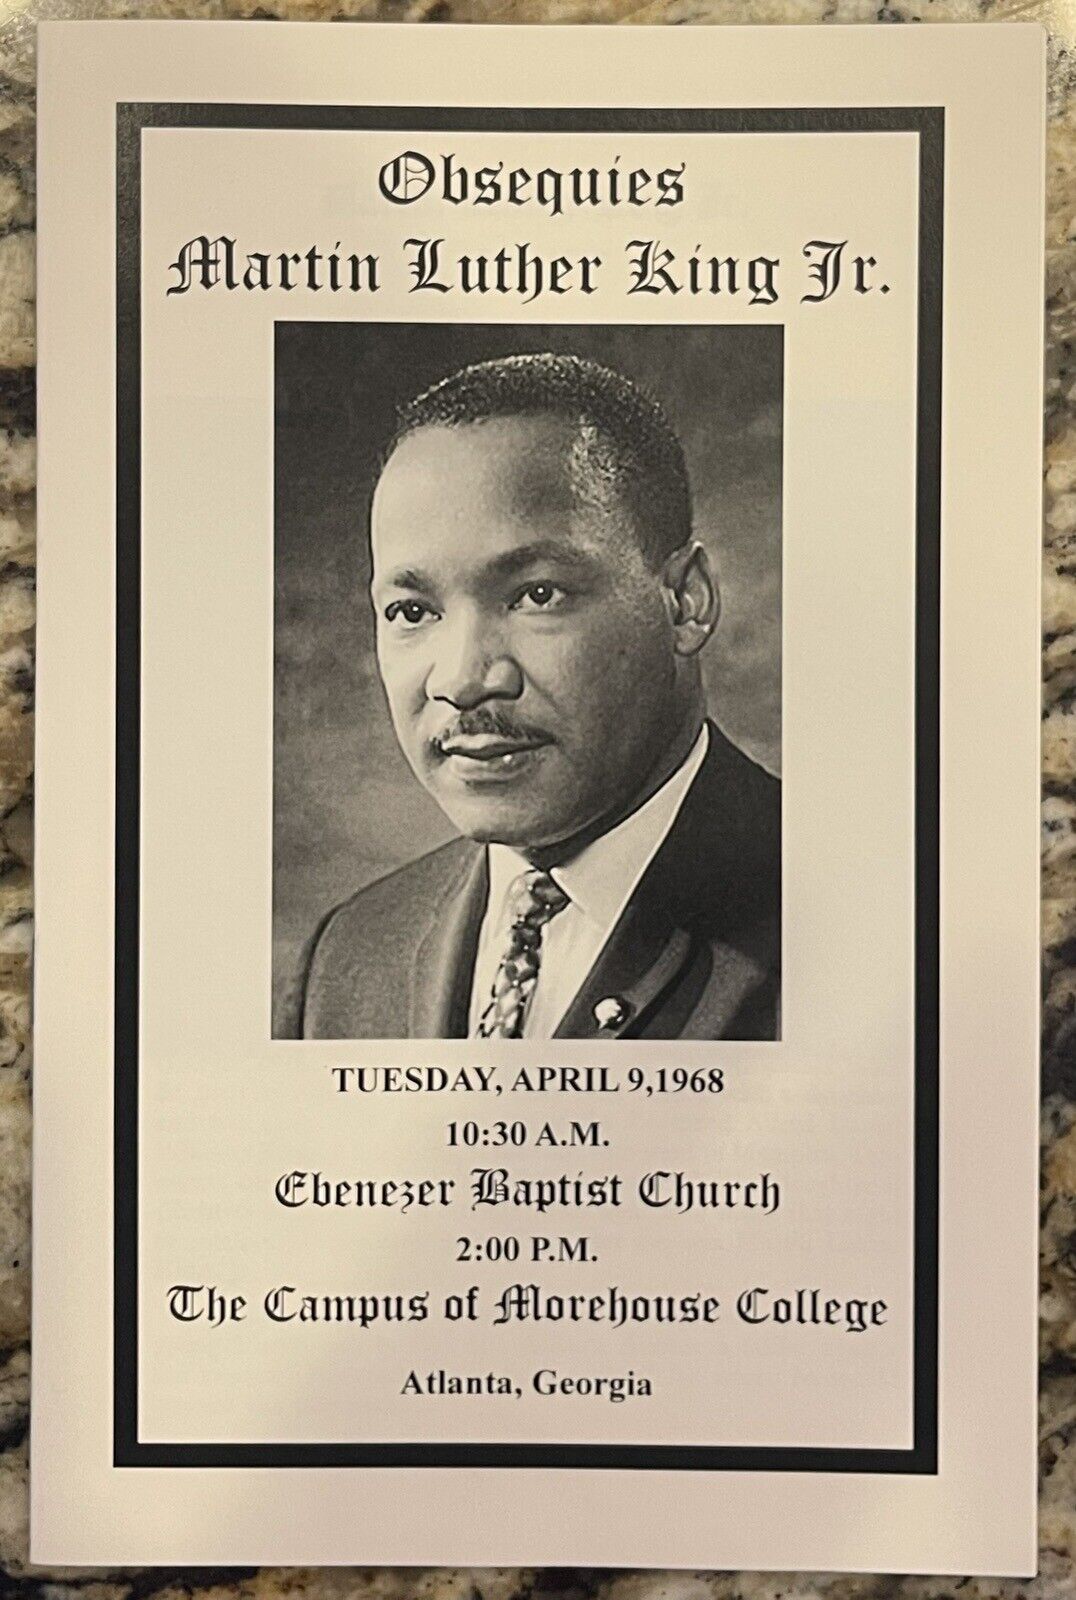 DR MARTIN LUTHER KING JR FUNERAL PROGRAM PHAMPLET APRIL 9 1968 GEORGIA AUTHENTIC